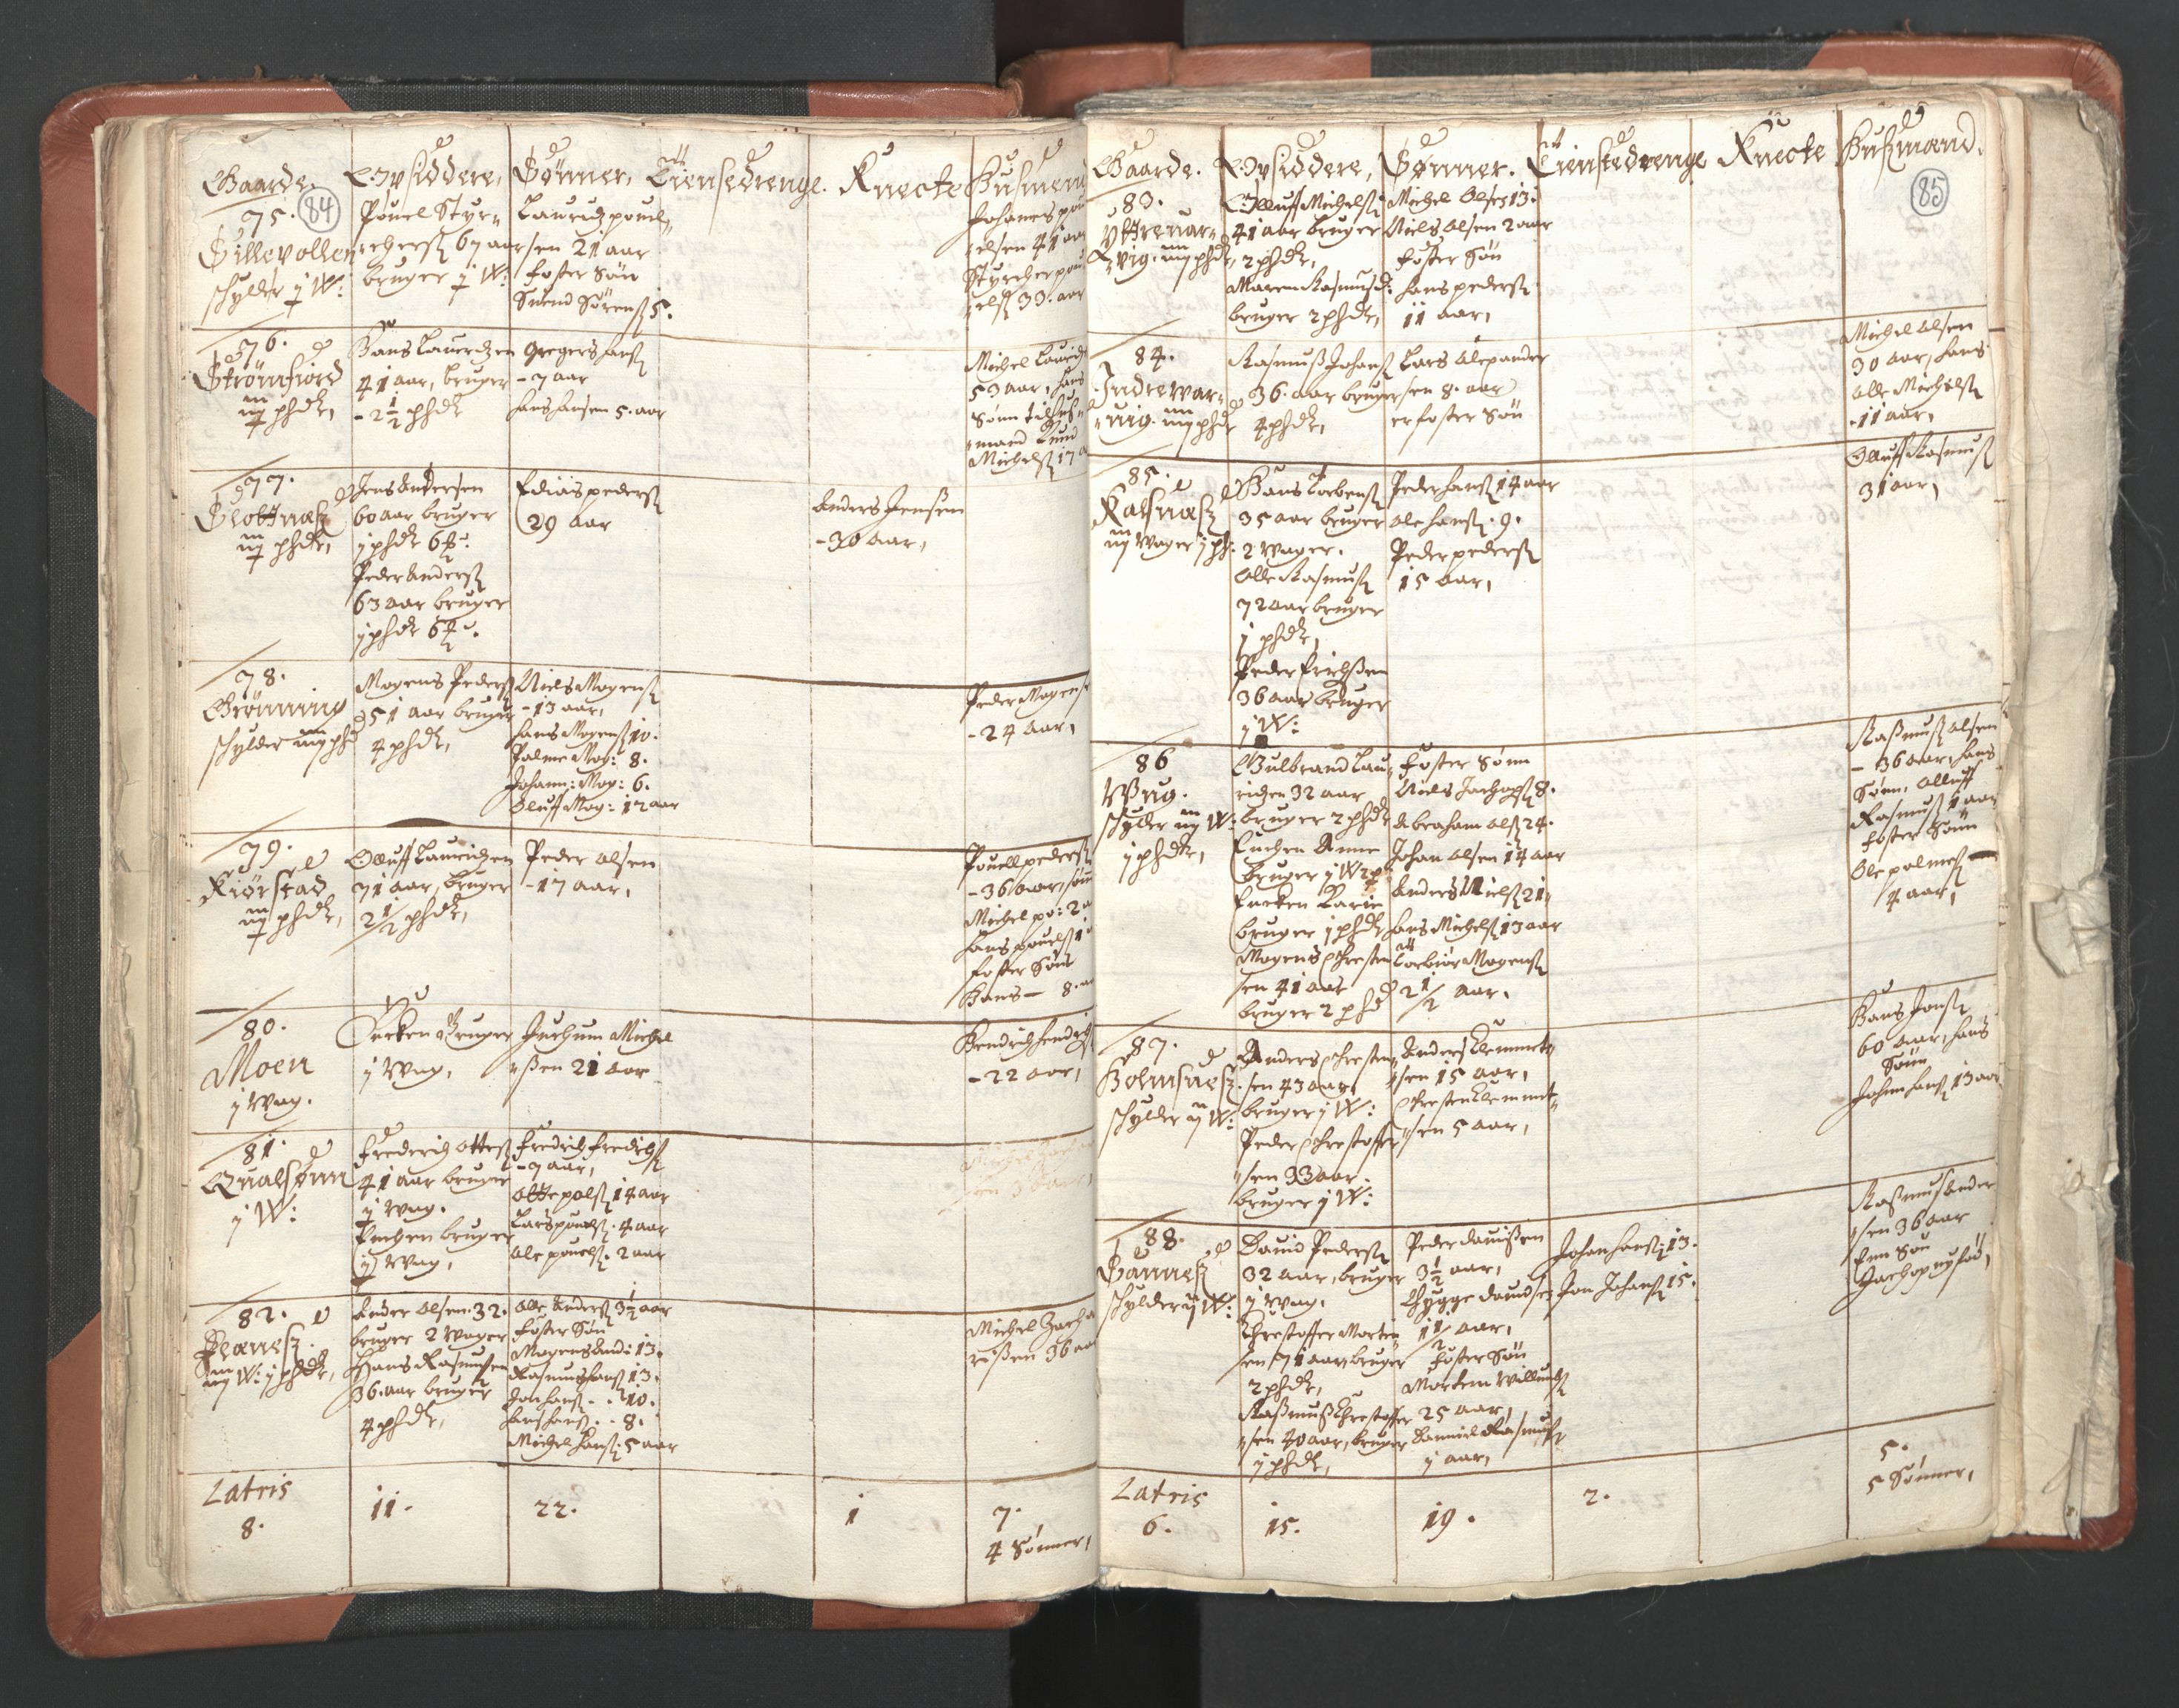 RA, Vicar's Census 1664-1666, no. 36: Lofoten and Vesterålen deanery, Senja deanery and Troms deanery, 1664-1666, p. 84-85